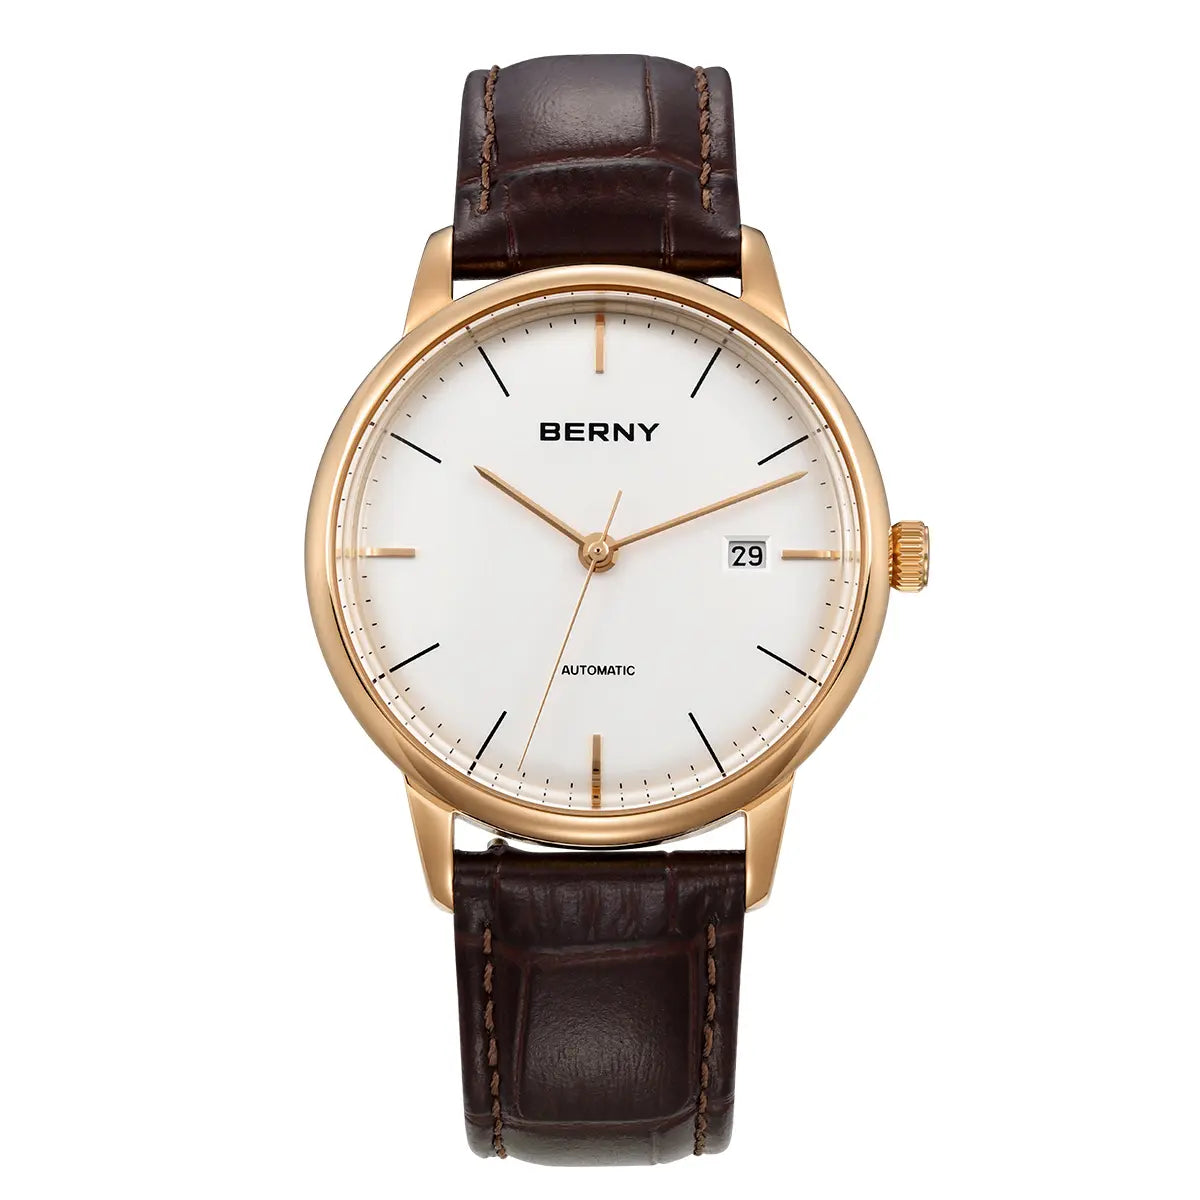 BERNY-Men Automatic Dress Watch-AM012M-RG